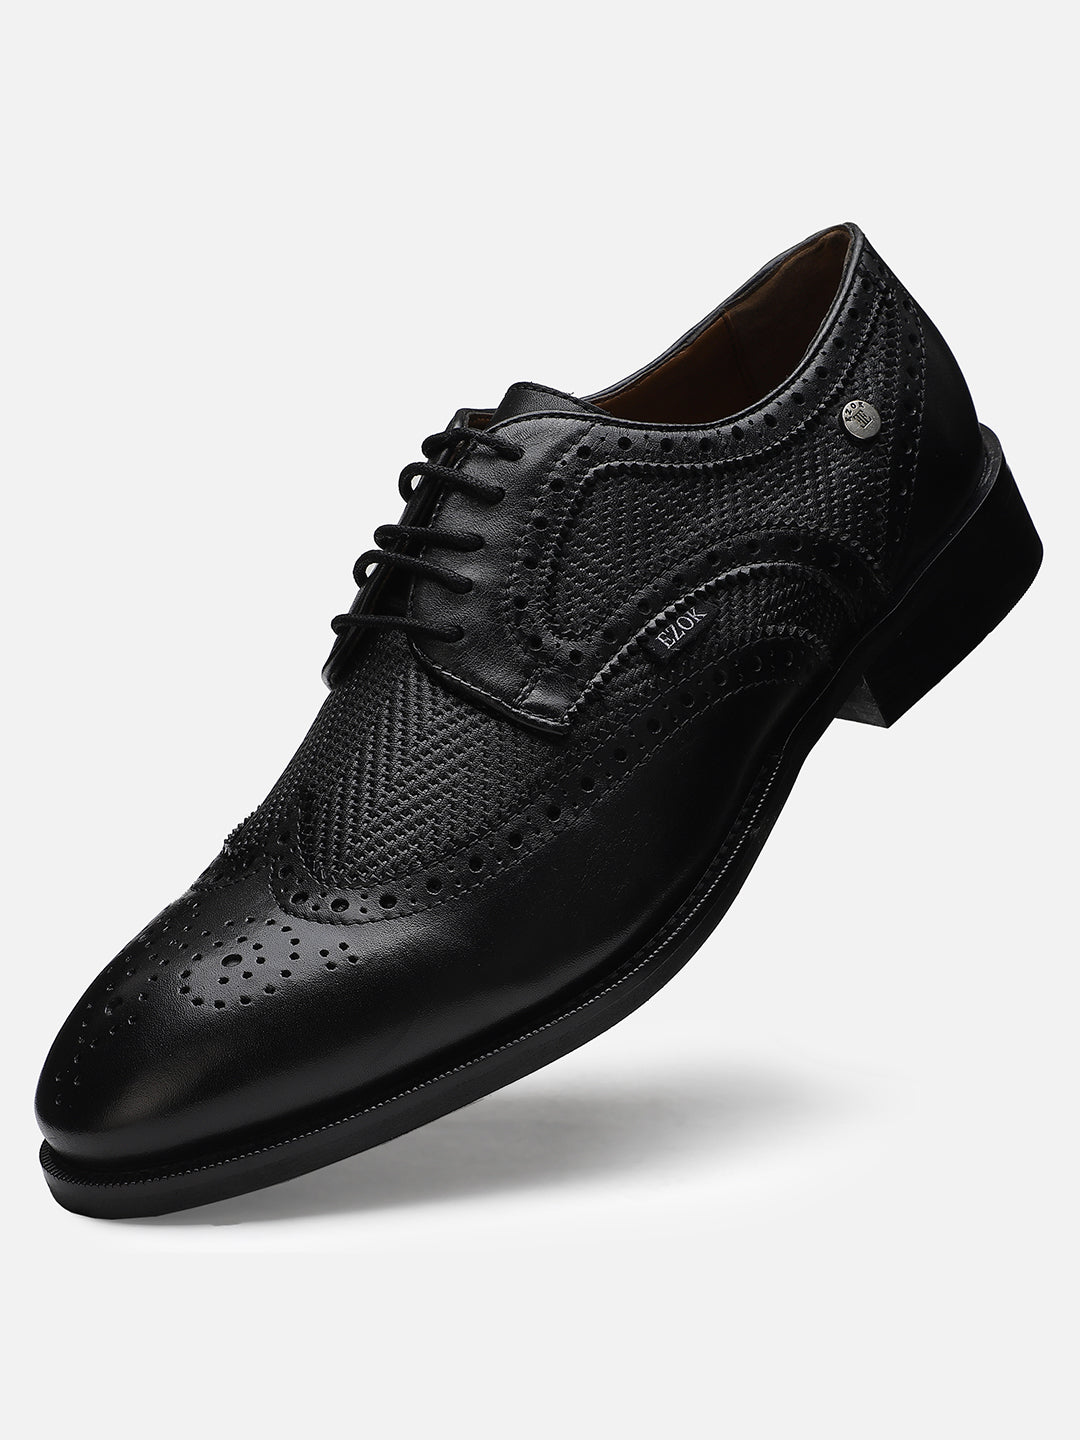 Ezok Men Black Perforated Leather Shoes